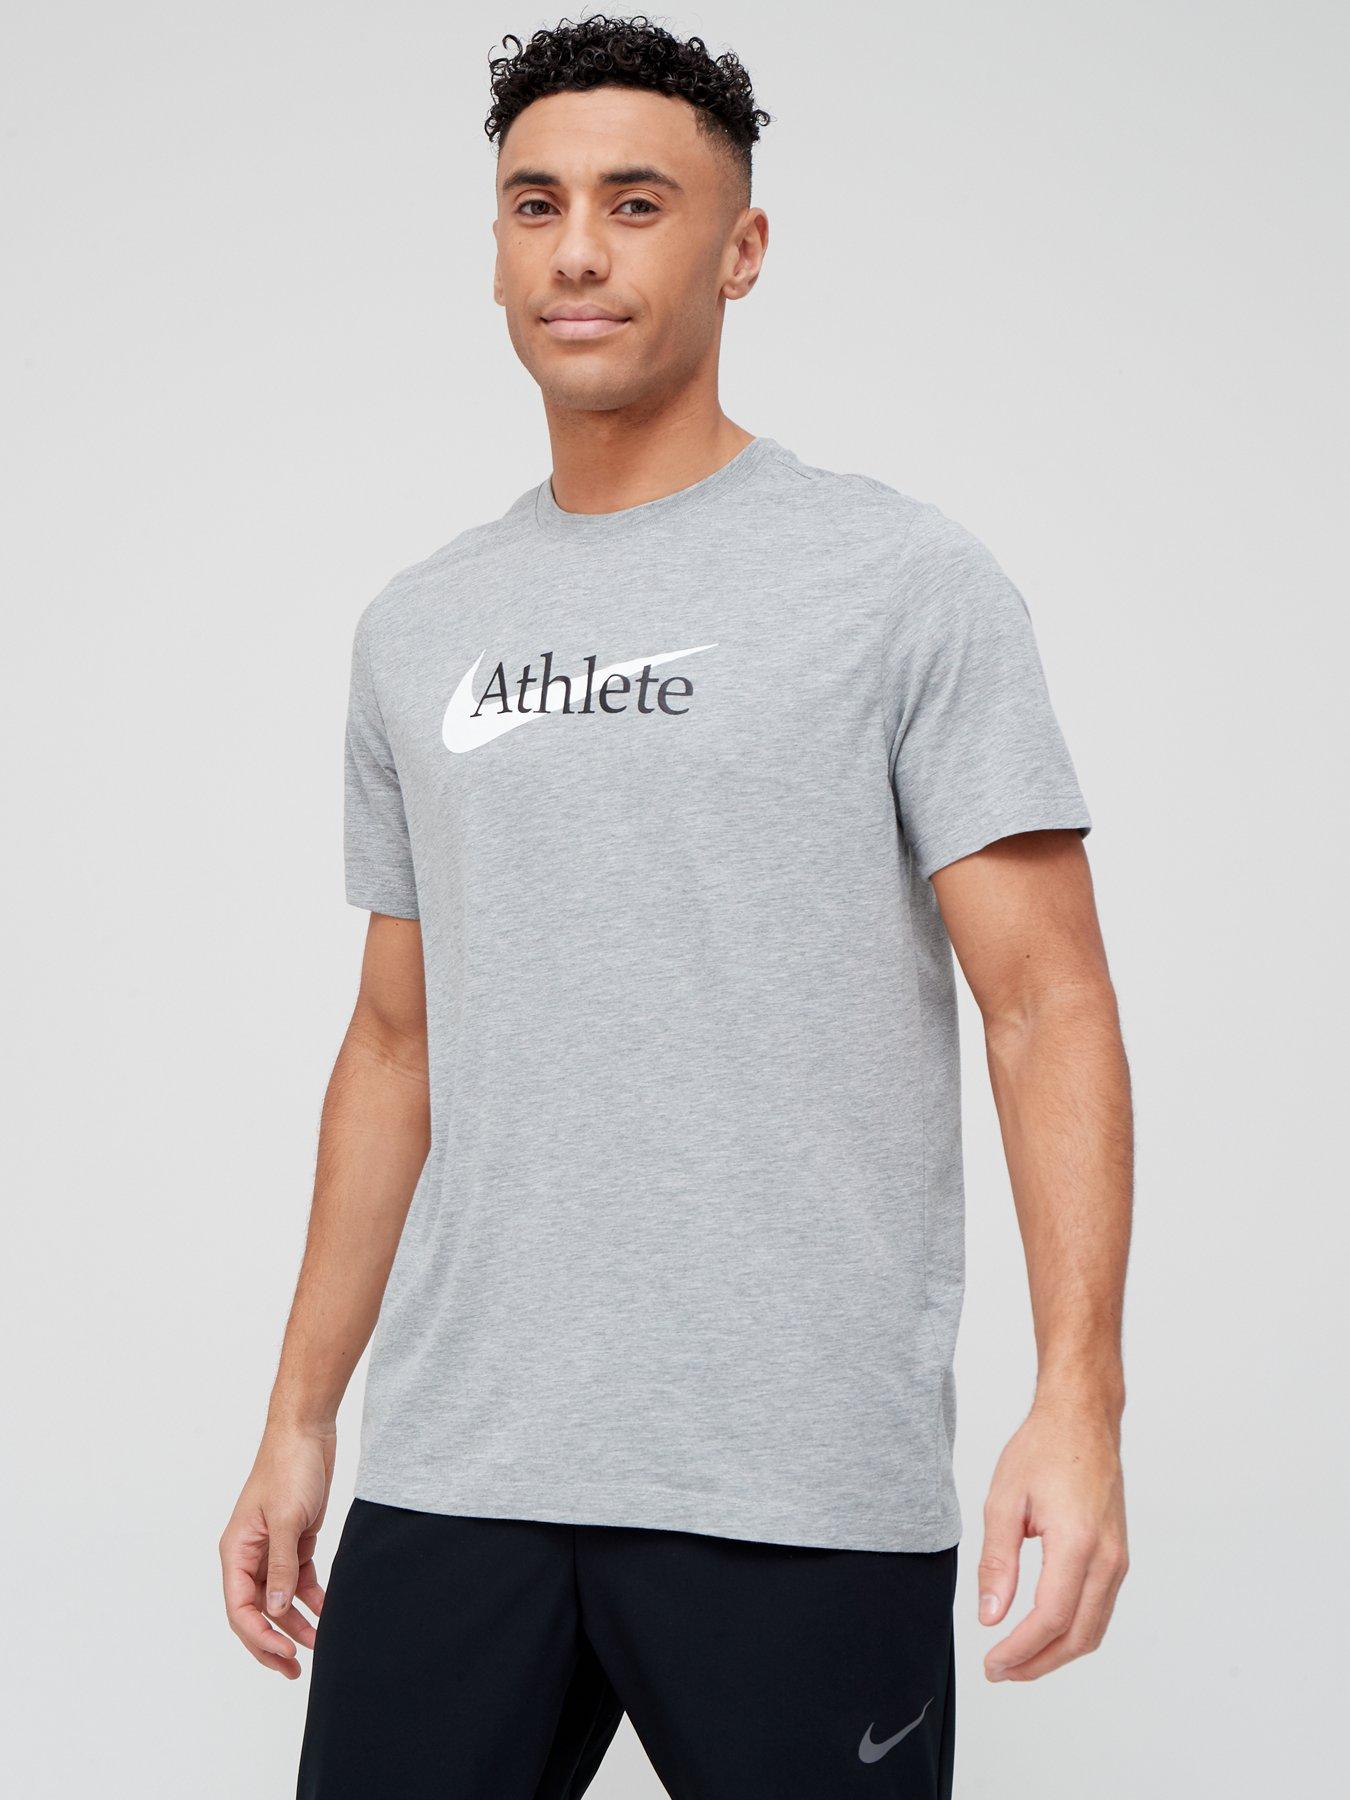 Nike Training Athlete T-Shirt - Dark 